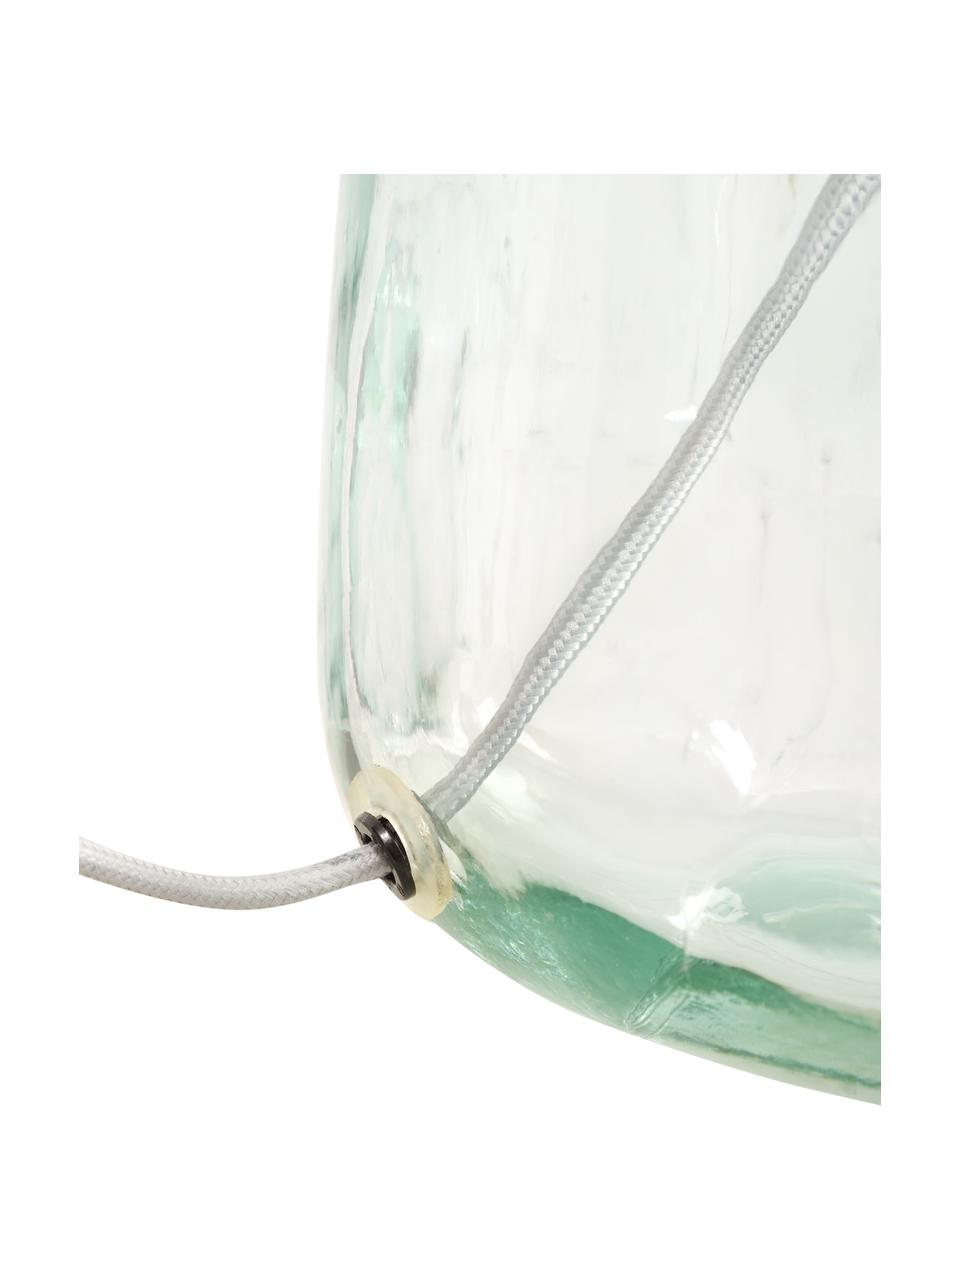 Tafellamp Murano van gerecycled glas, Lampenkap: linnen, Lampvoet: gerecycled glas, Donkerblauw, transparant, grijs, Ø 32 x H 34 cm